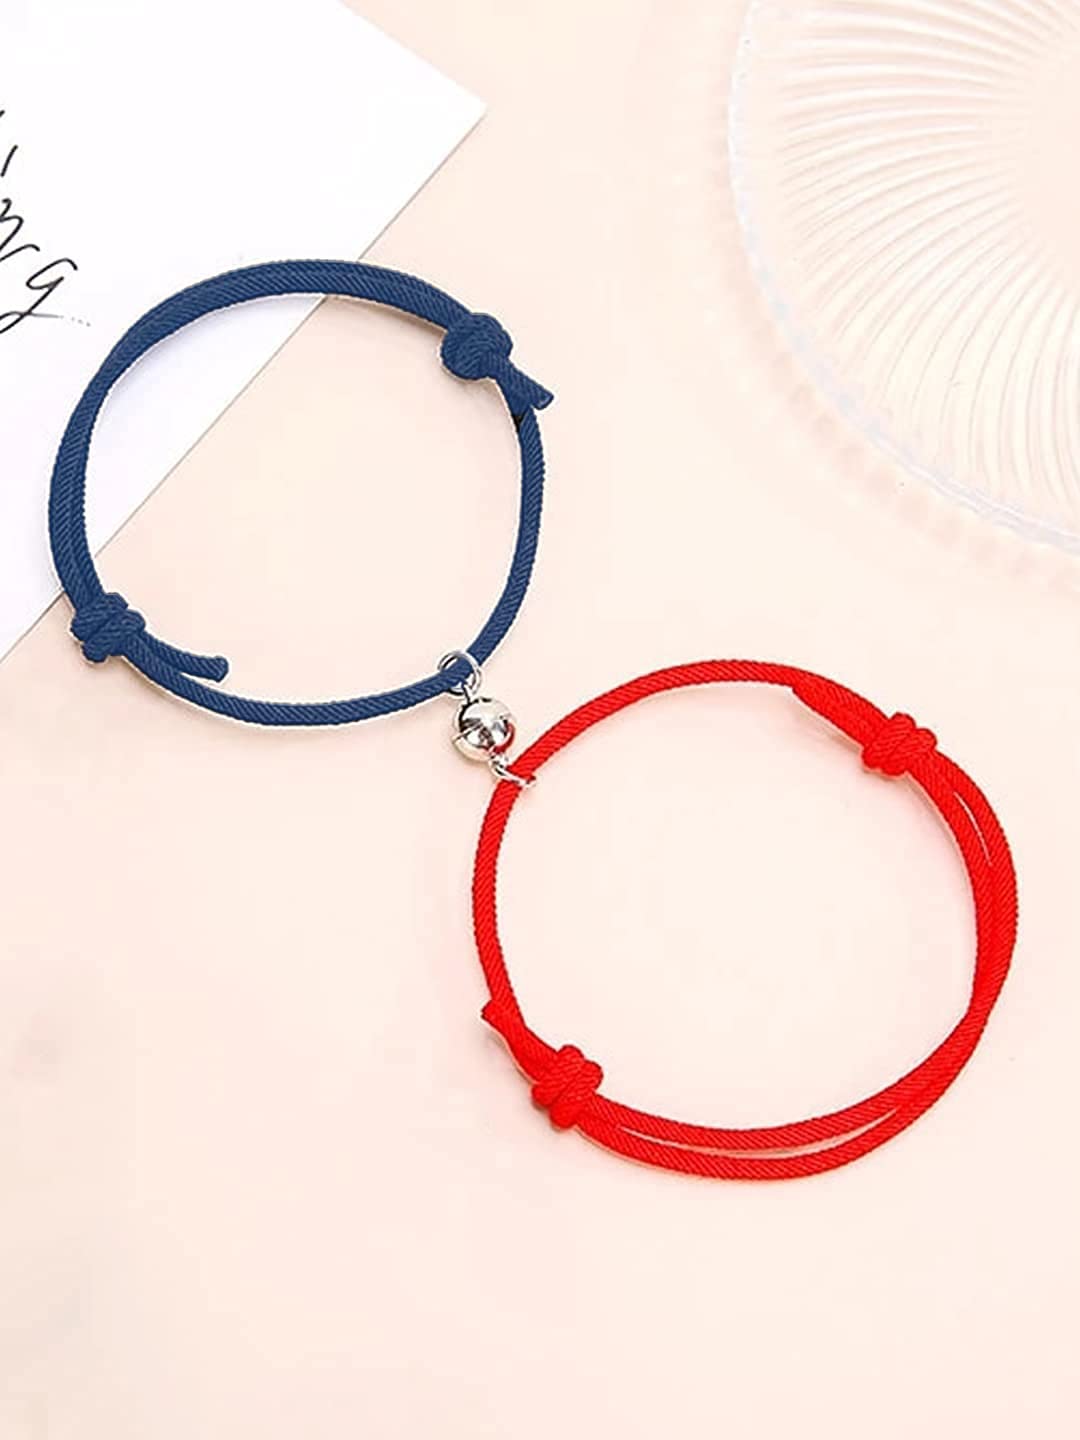 Buy QUPENGXU Red-Yellow Mix Lucky Bracelet Handmade Woven Thread String  Bracelet for Men Women Girls, cord, np at Amazon.in